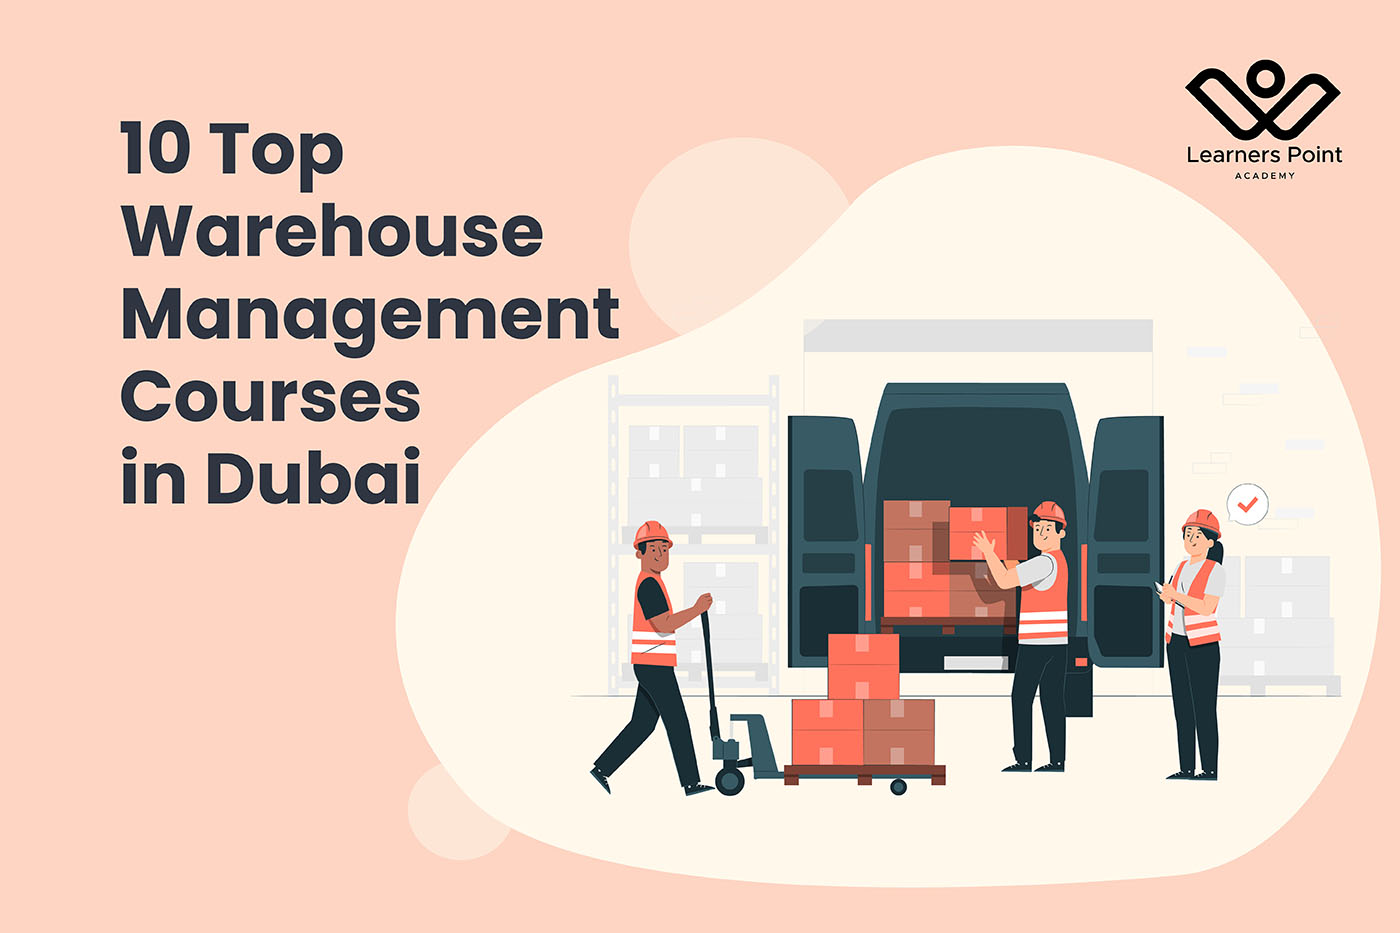 10 Top Warehouse Management Courses in Dubai